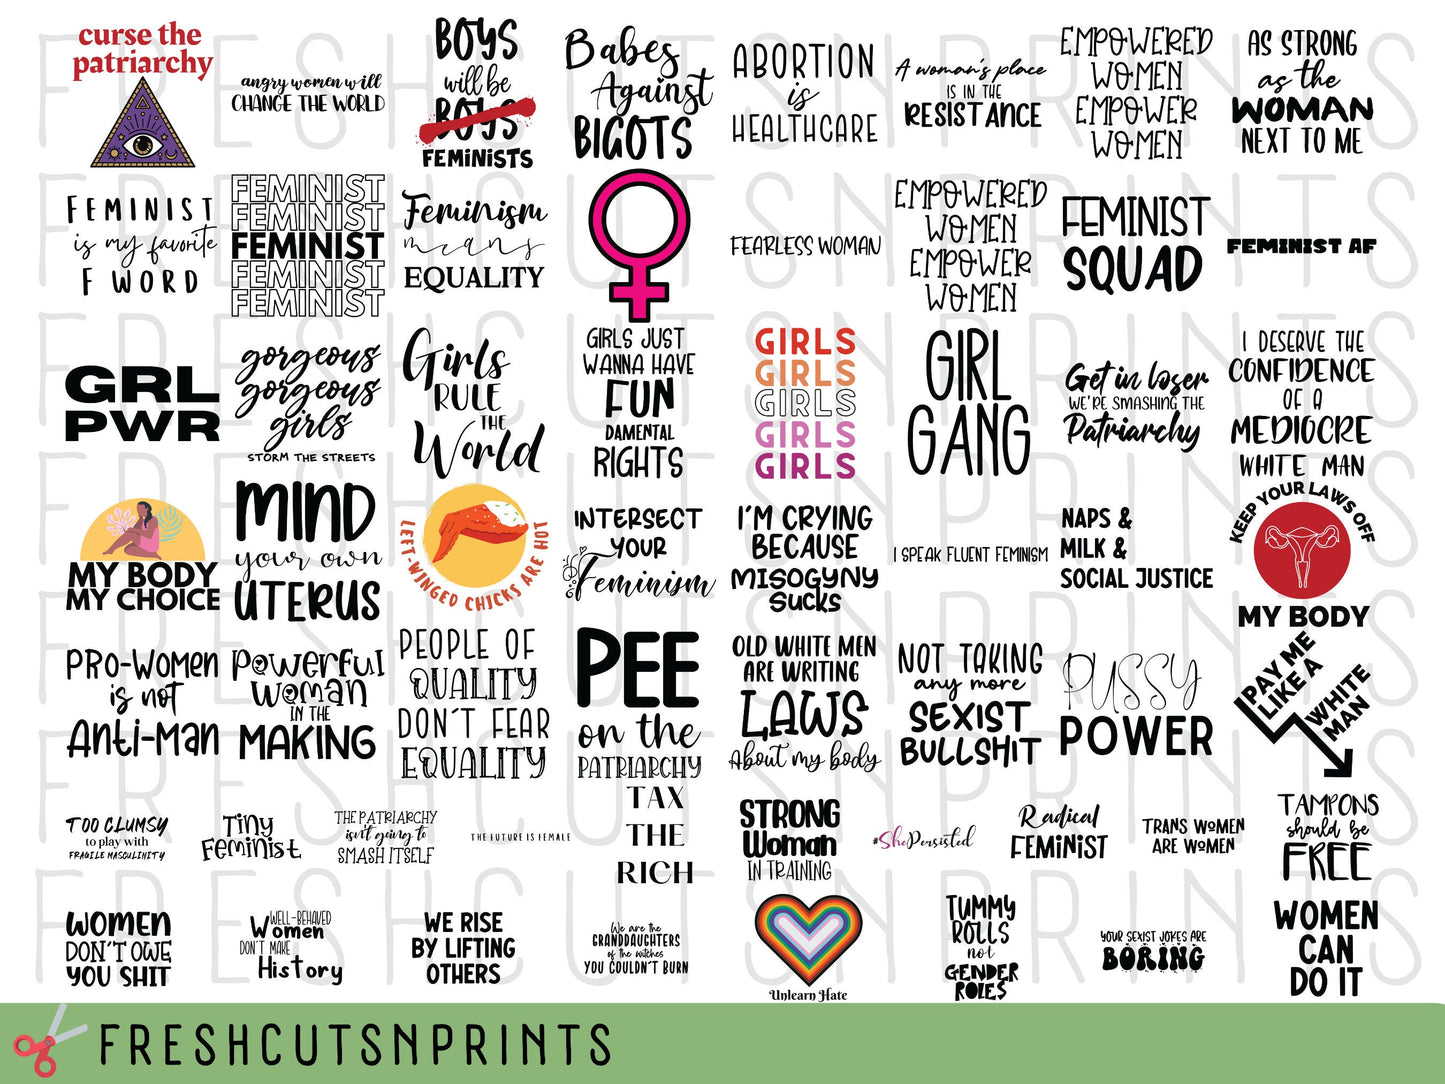 Pro Choice SVG Design, Pro Roe svg, Reproductive Rights SVG, Women's Rights svg, Feminist SVG, Roe v Wade svg, Feminist svg print, cricut